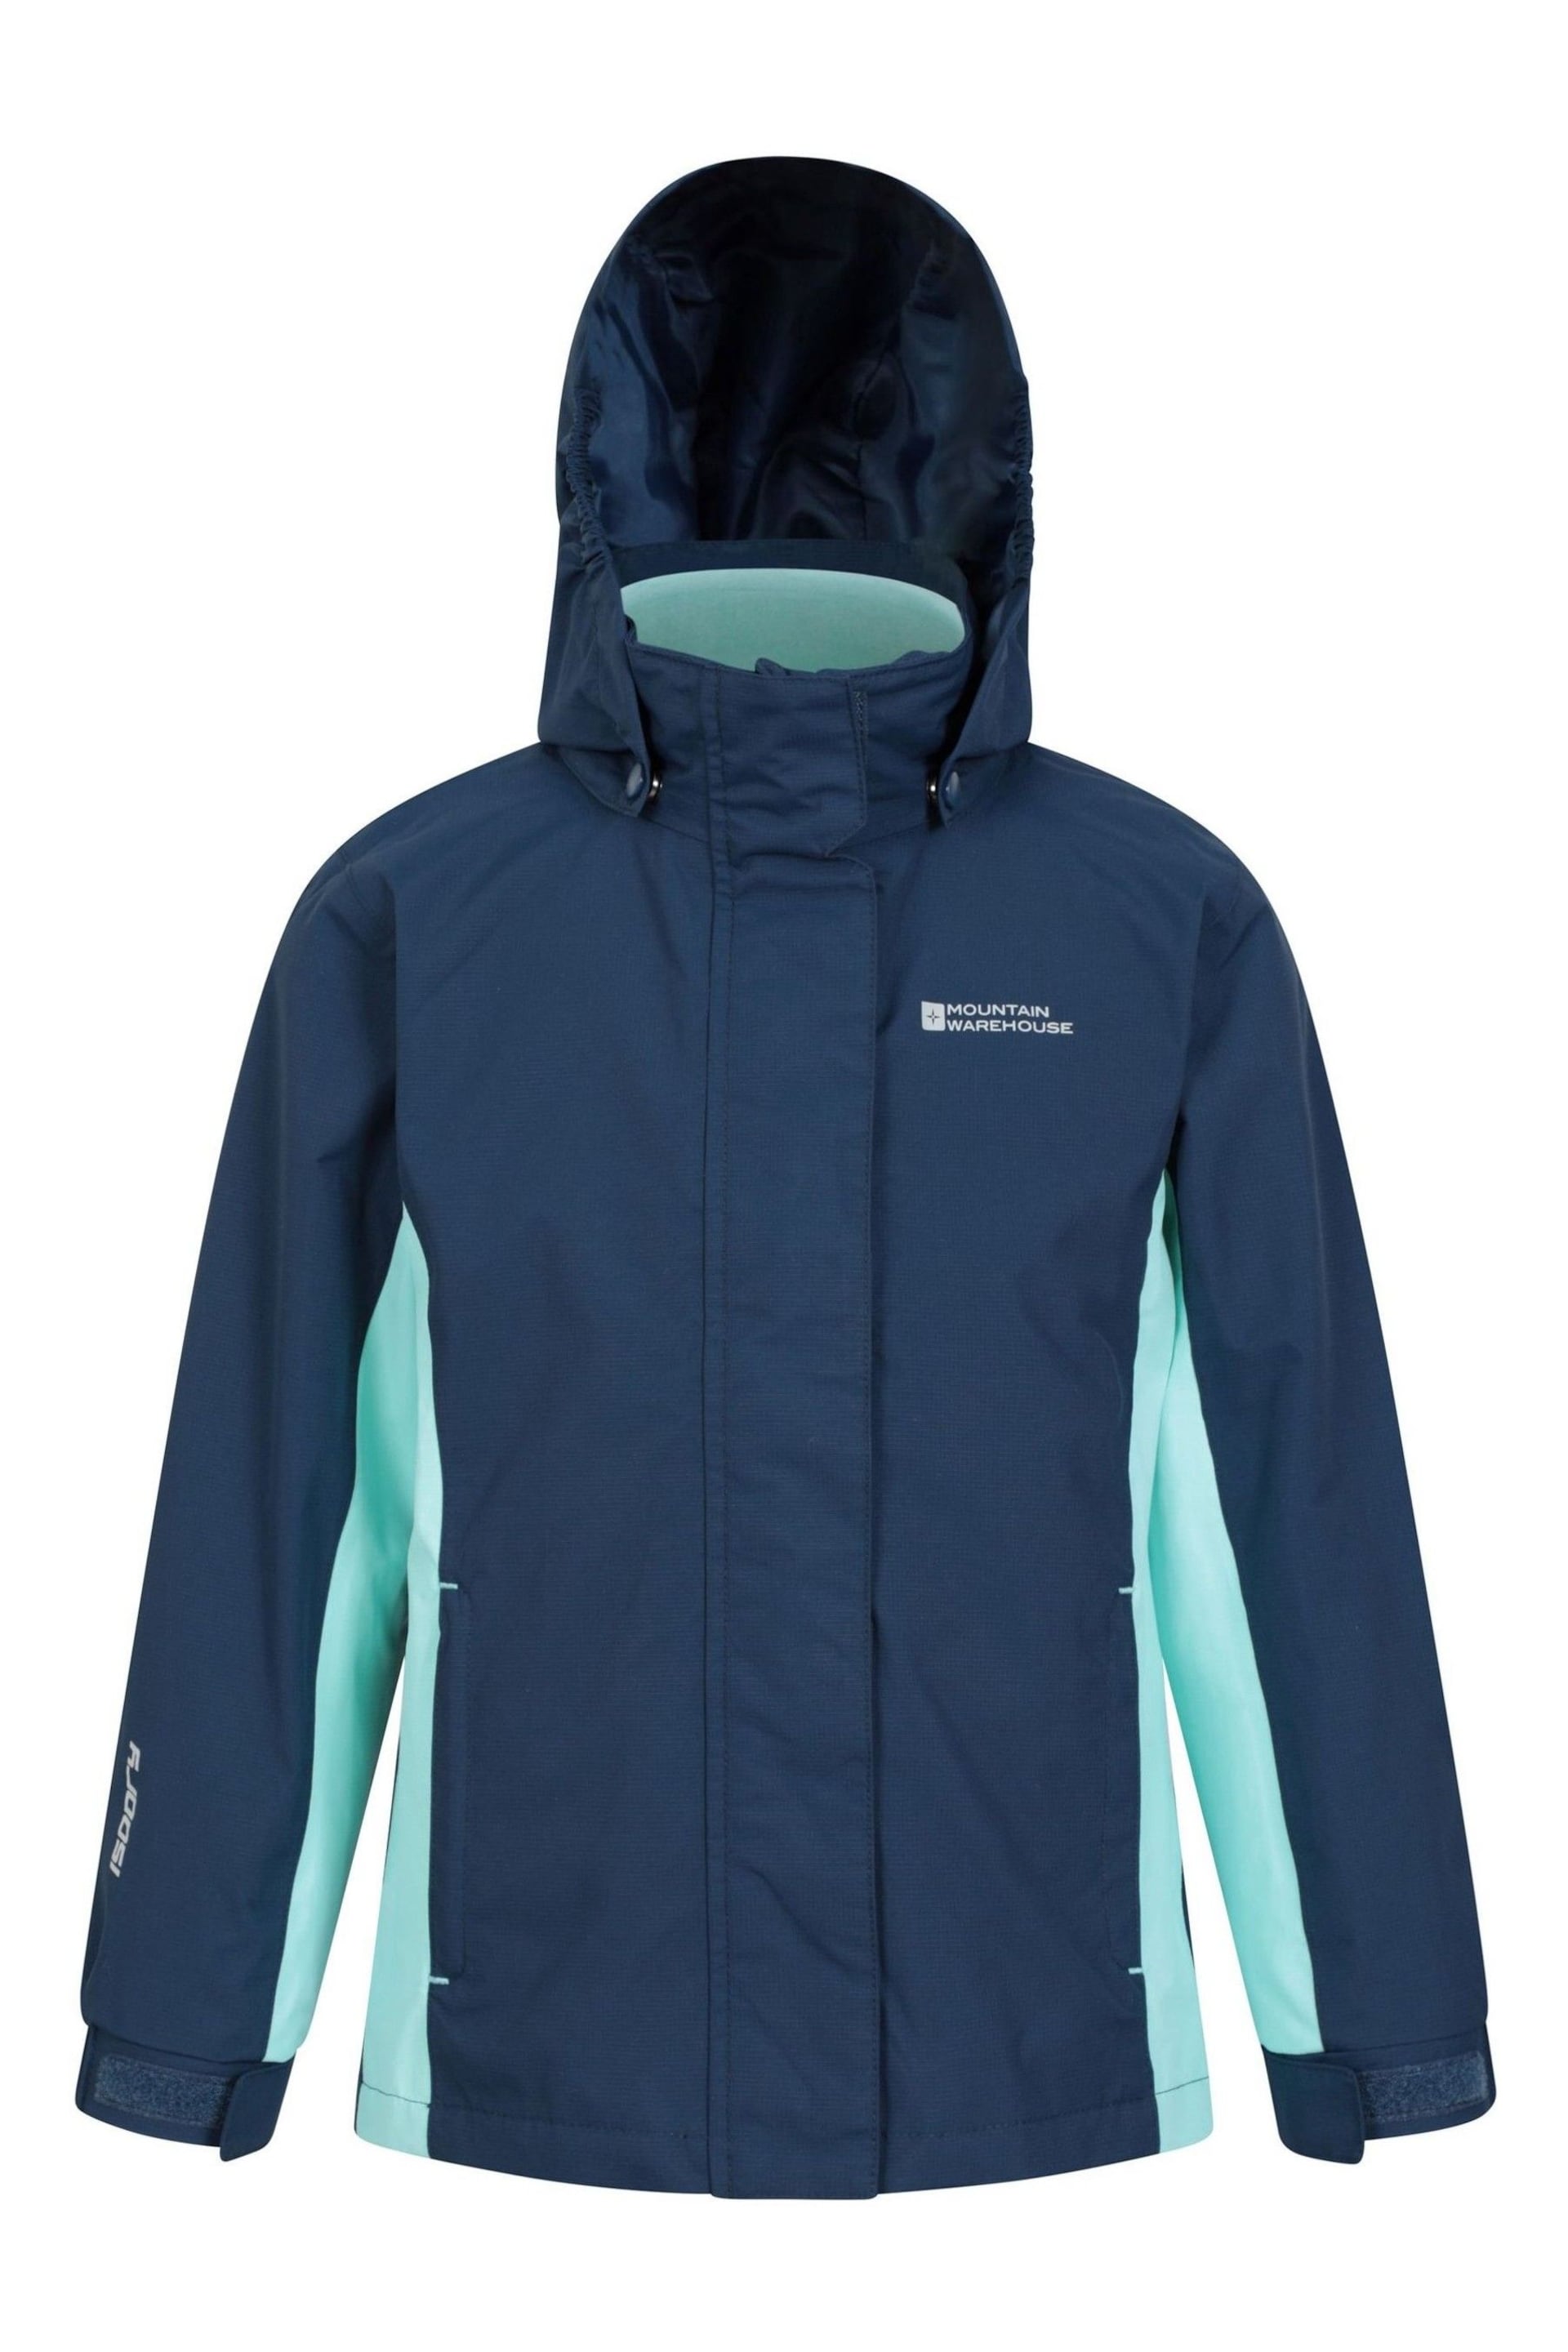 Mountain Warehouse Blue Chrome Lightning 3 in 1 Waterproof Jacket - Image 5 of 5